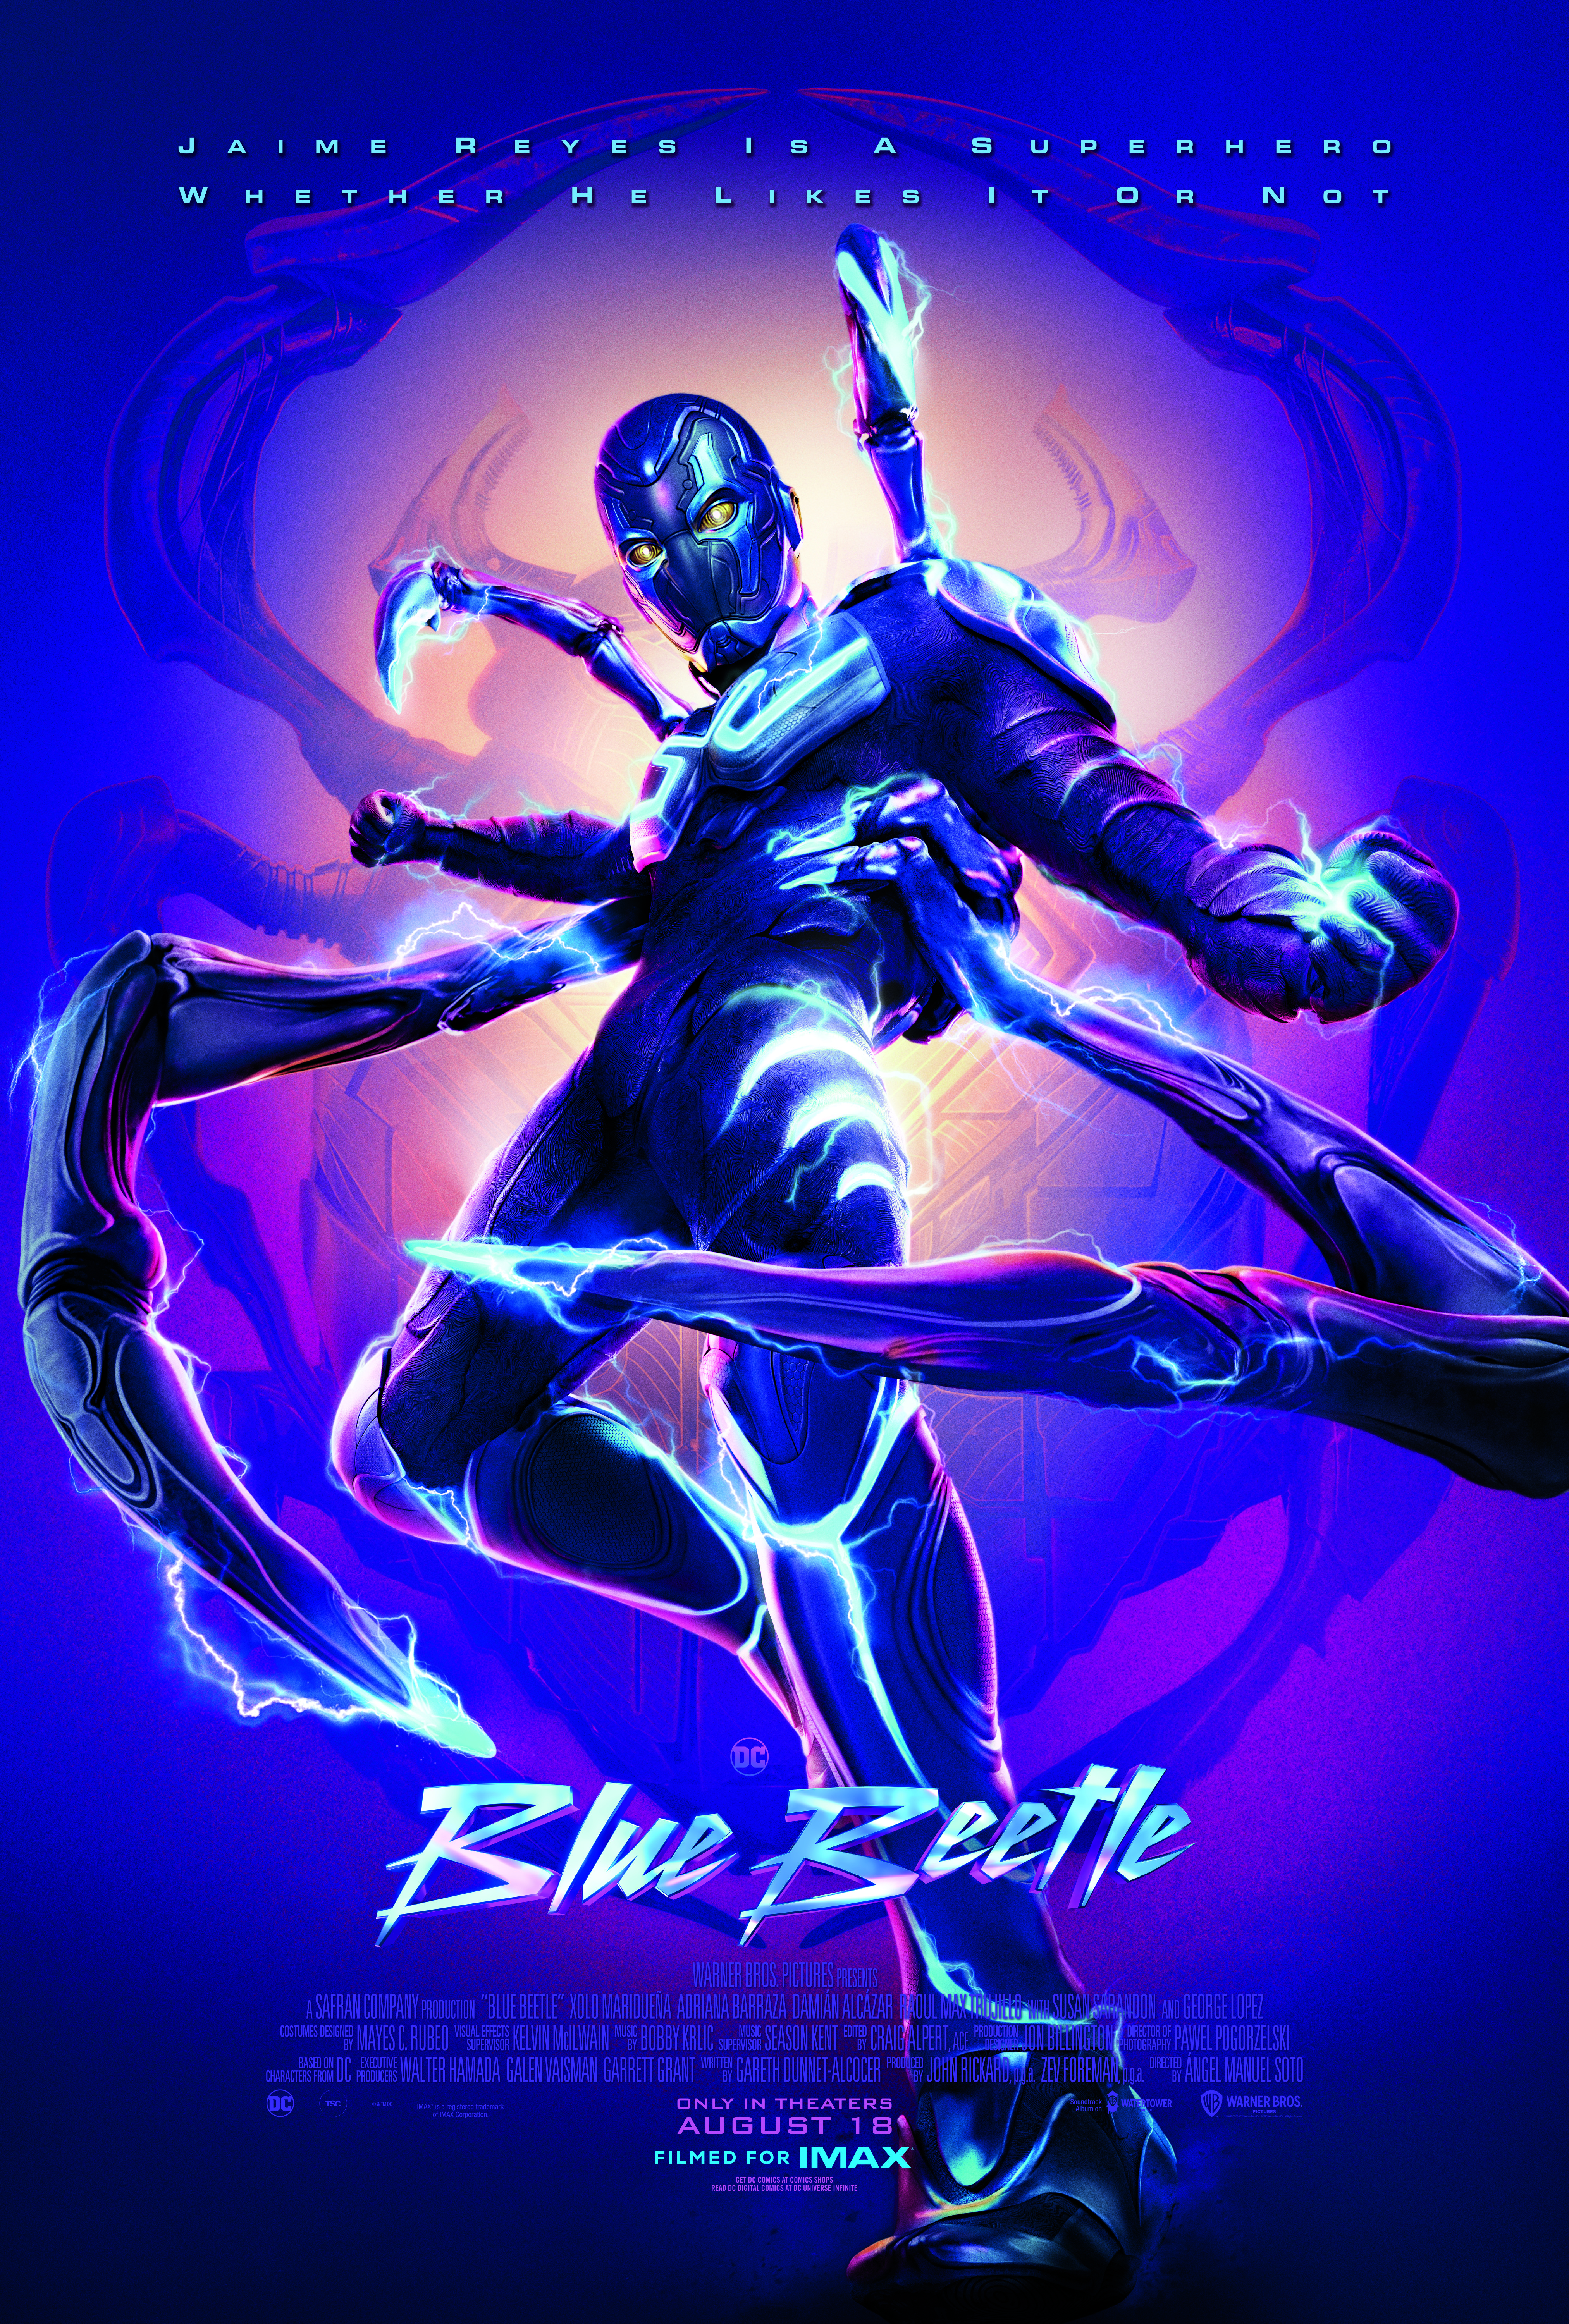 Blue Beetle poster (Warner Bros. Pictures)